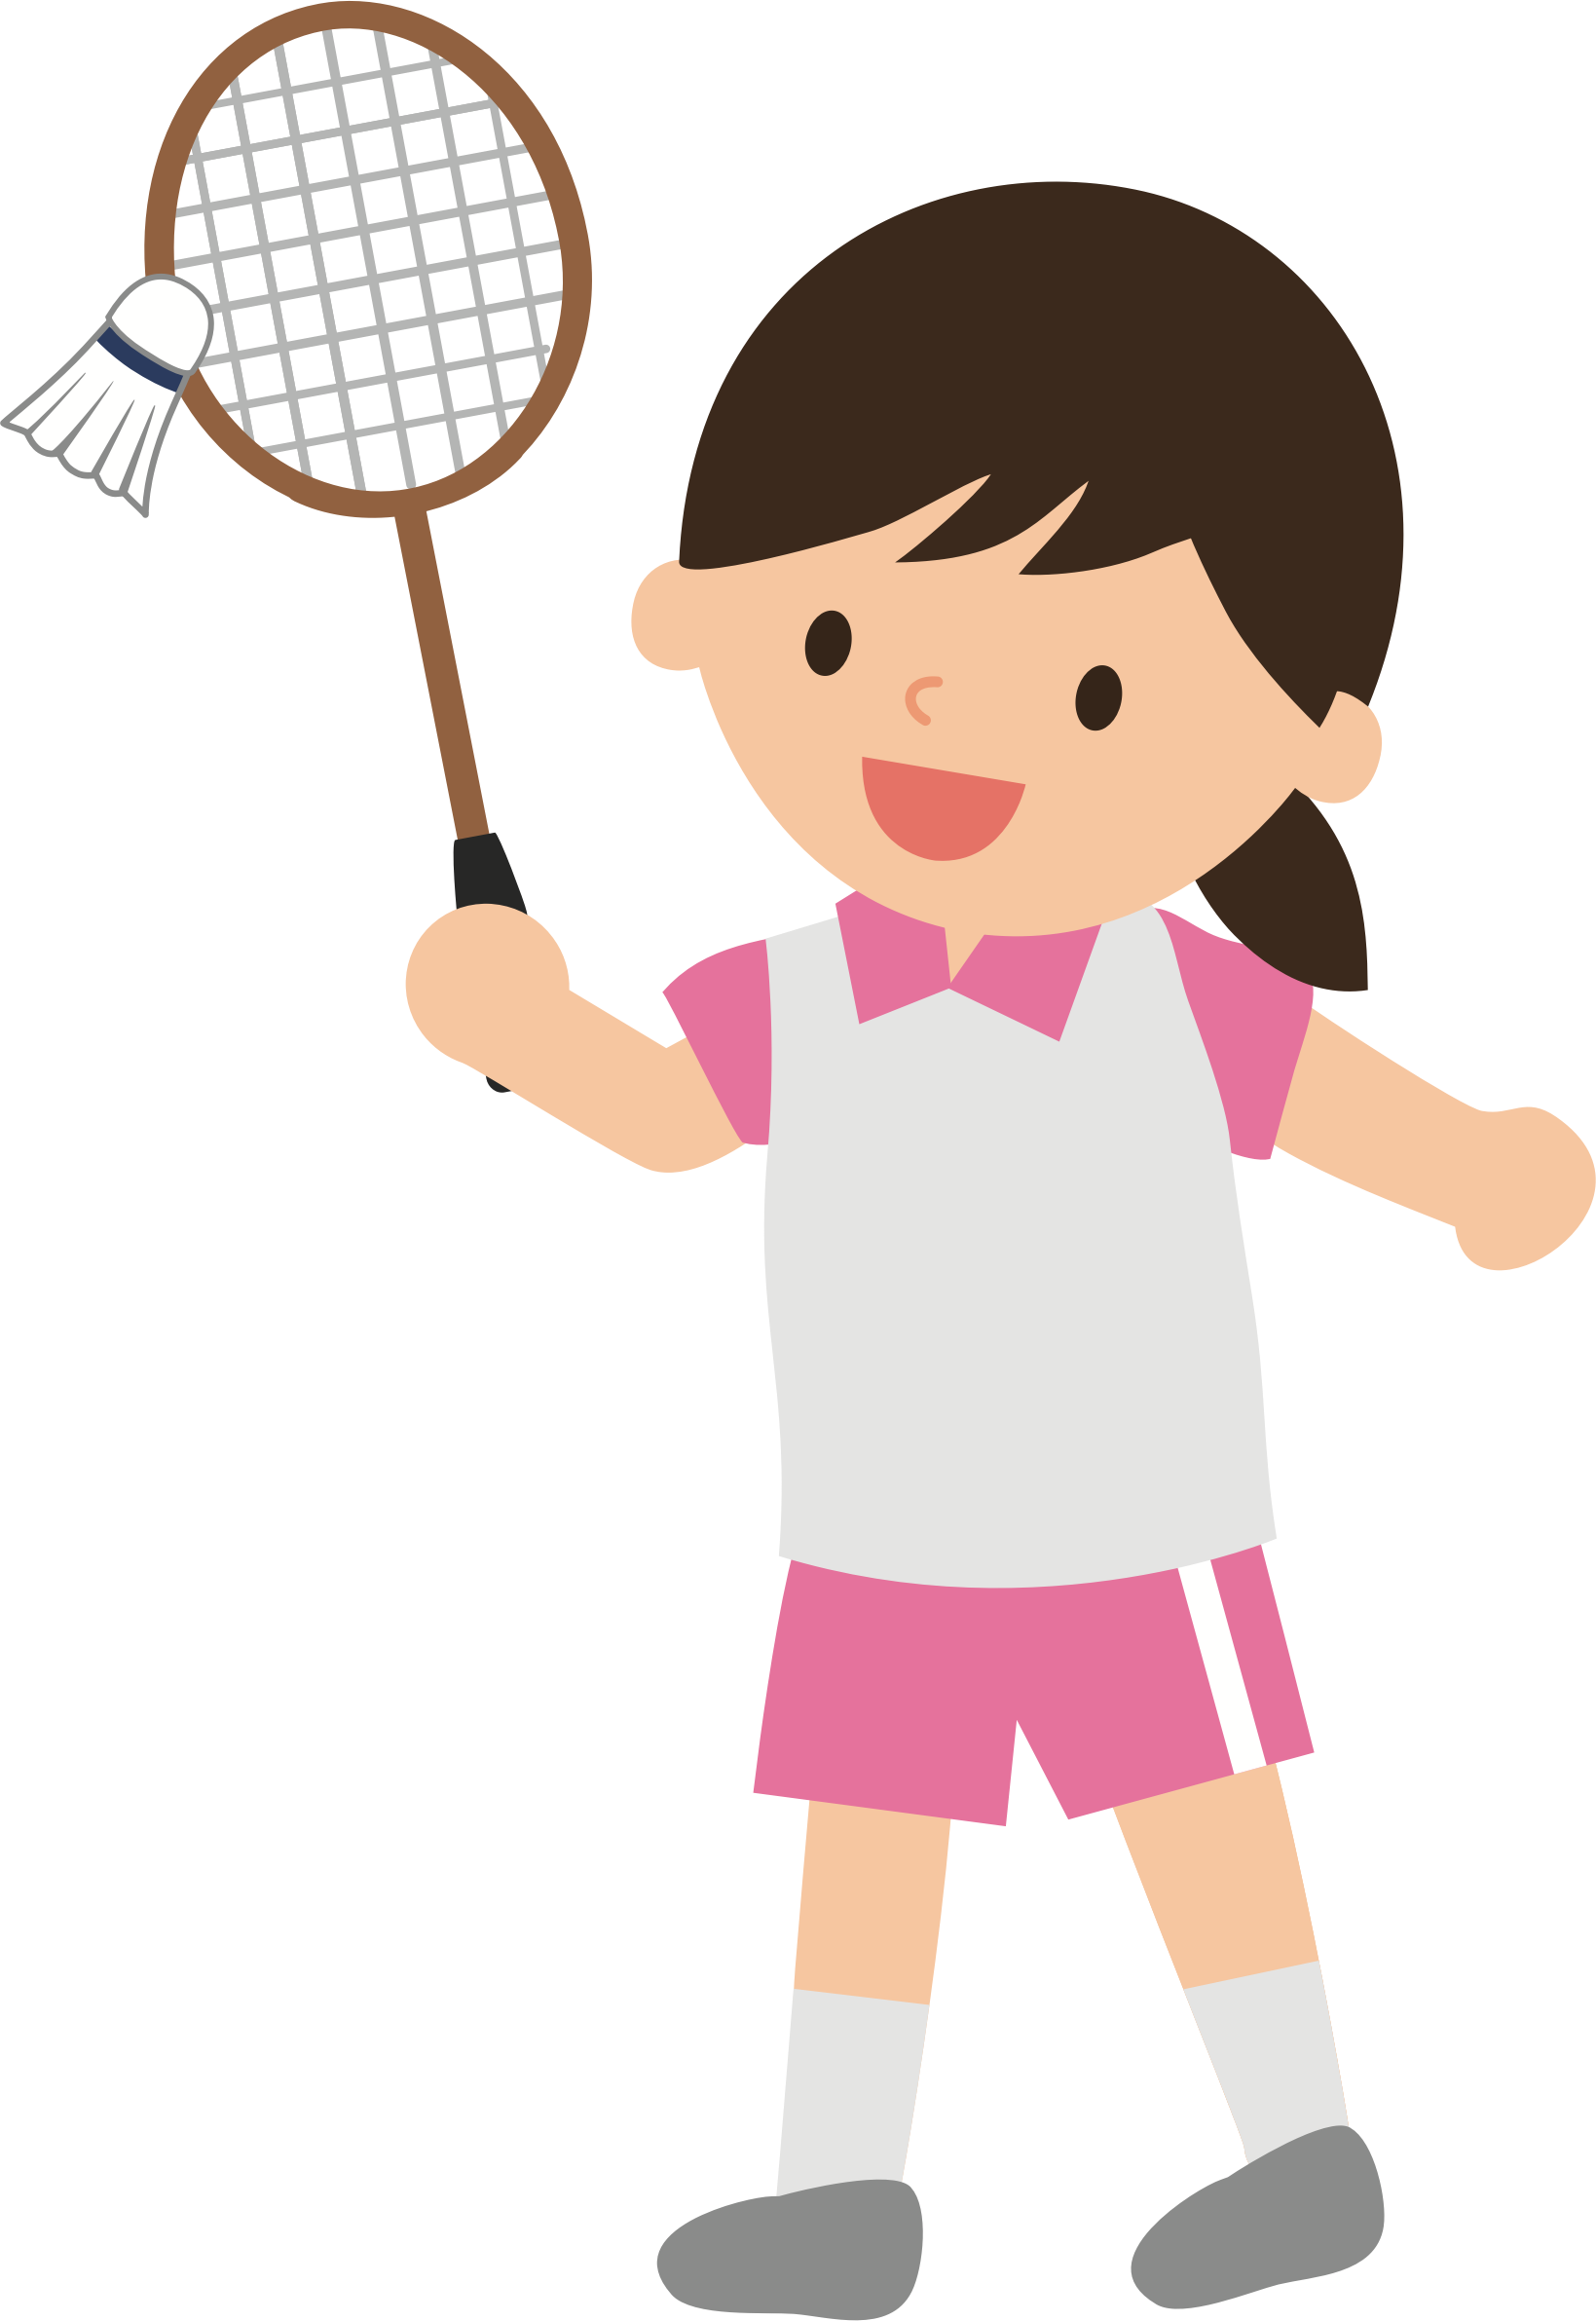 Cartoon Child Badminton Player